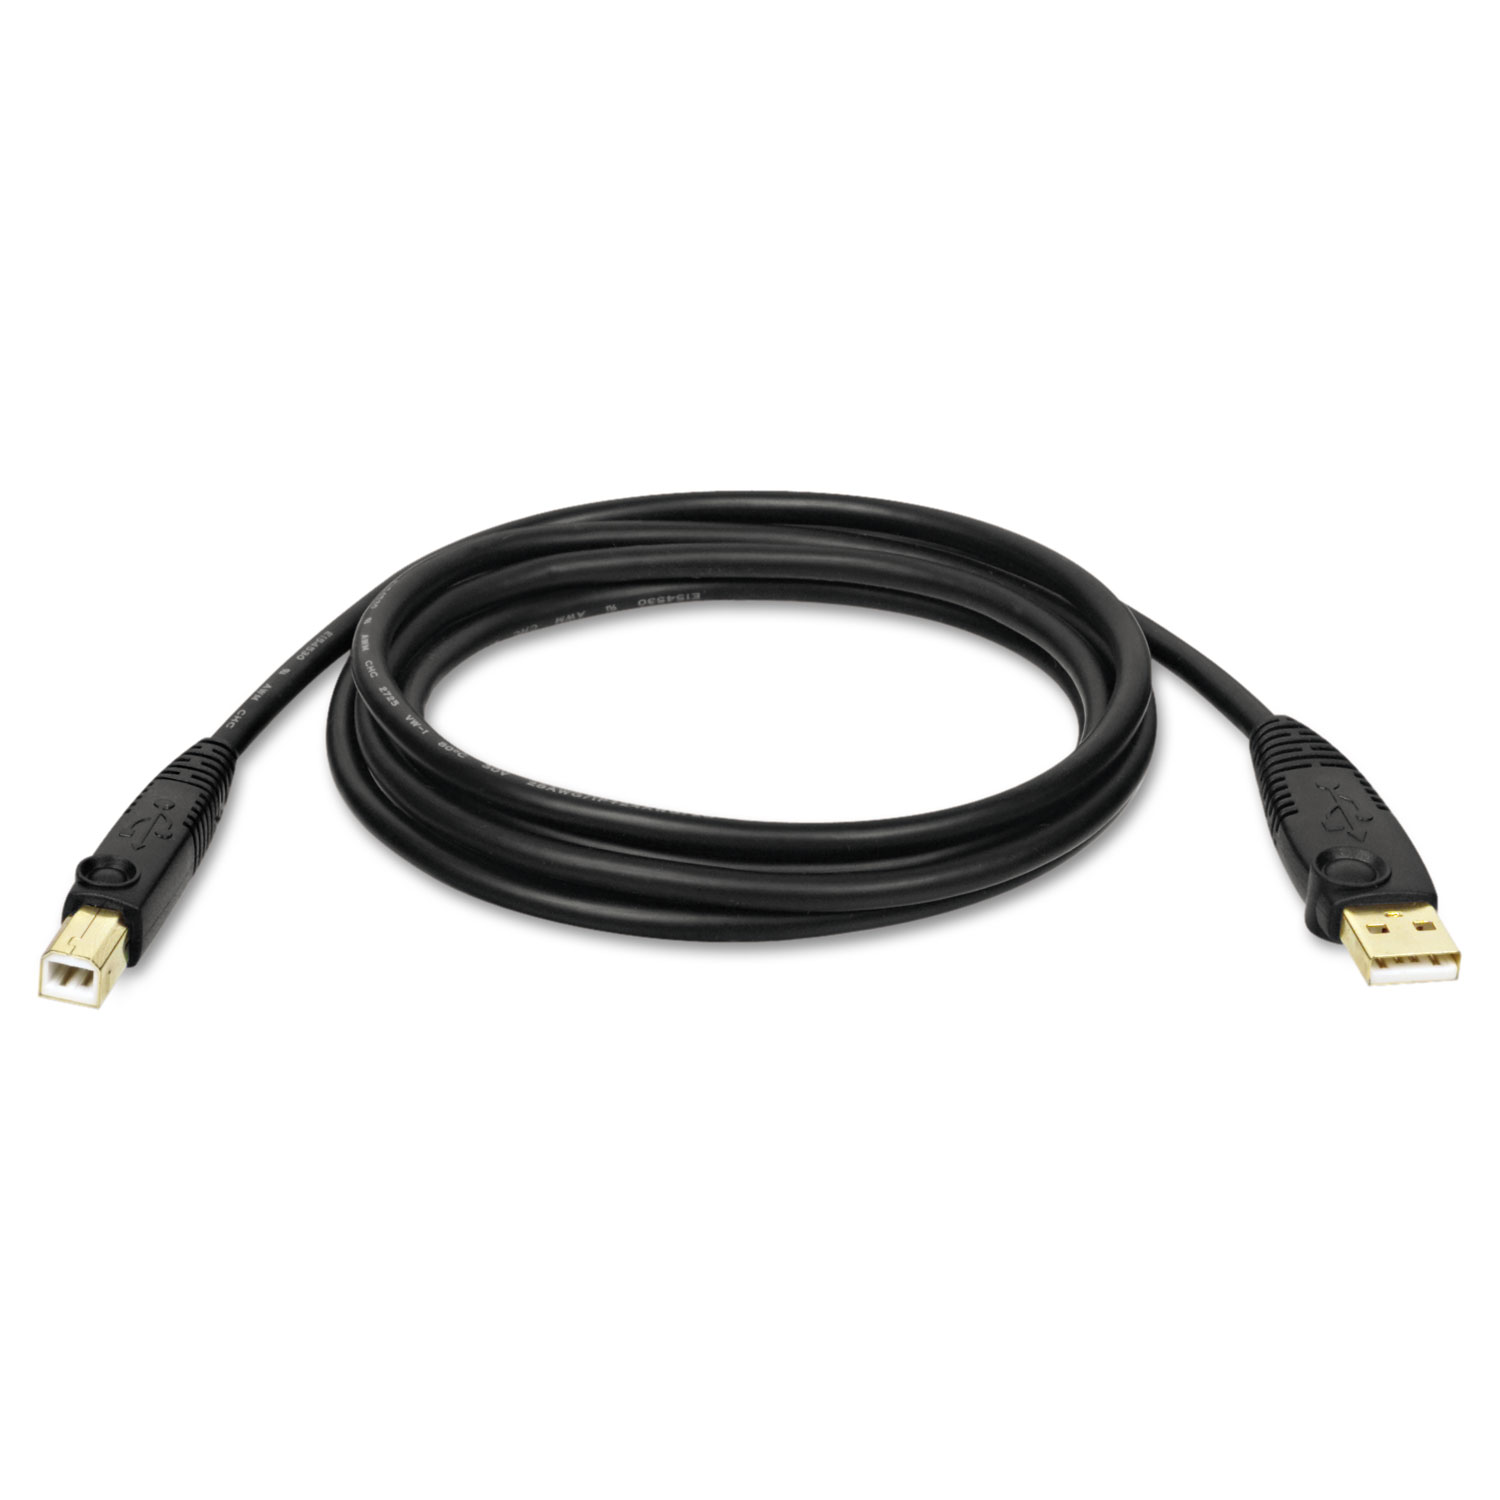  Tripp Lite U022-015 USB 2.0 A/B Cable (M/M), 15 ft., Black (TRPU022015) 